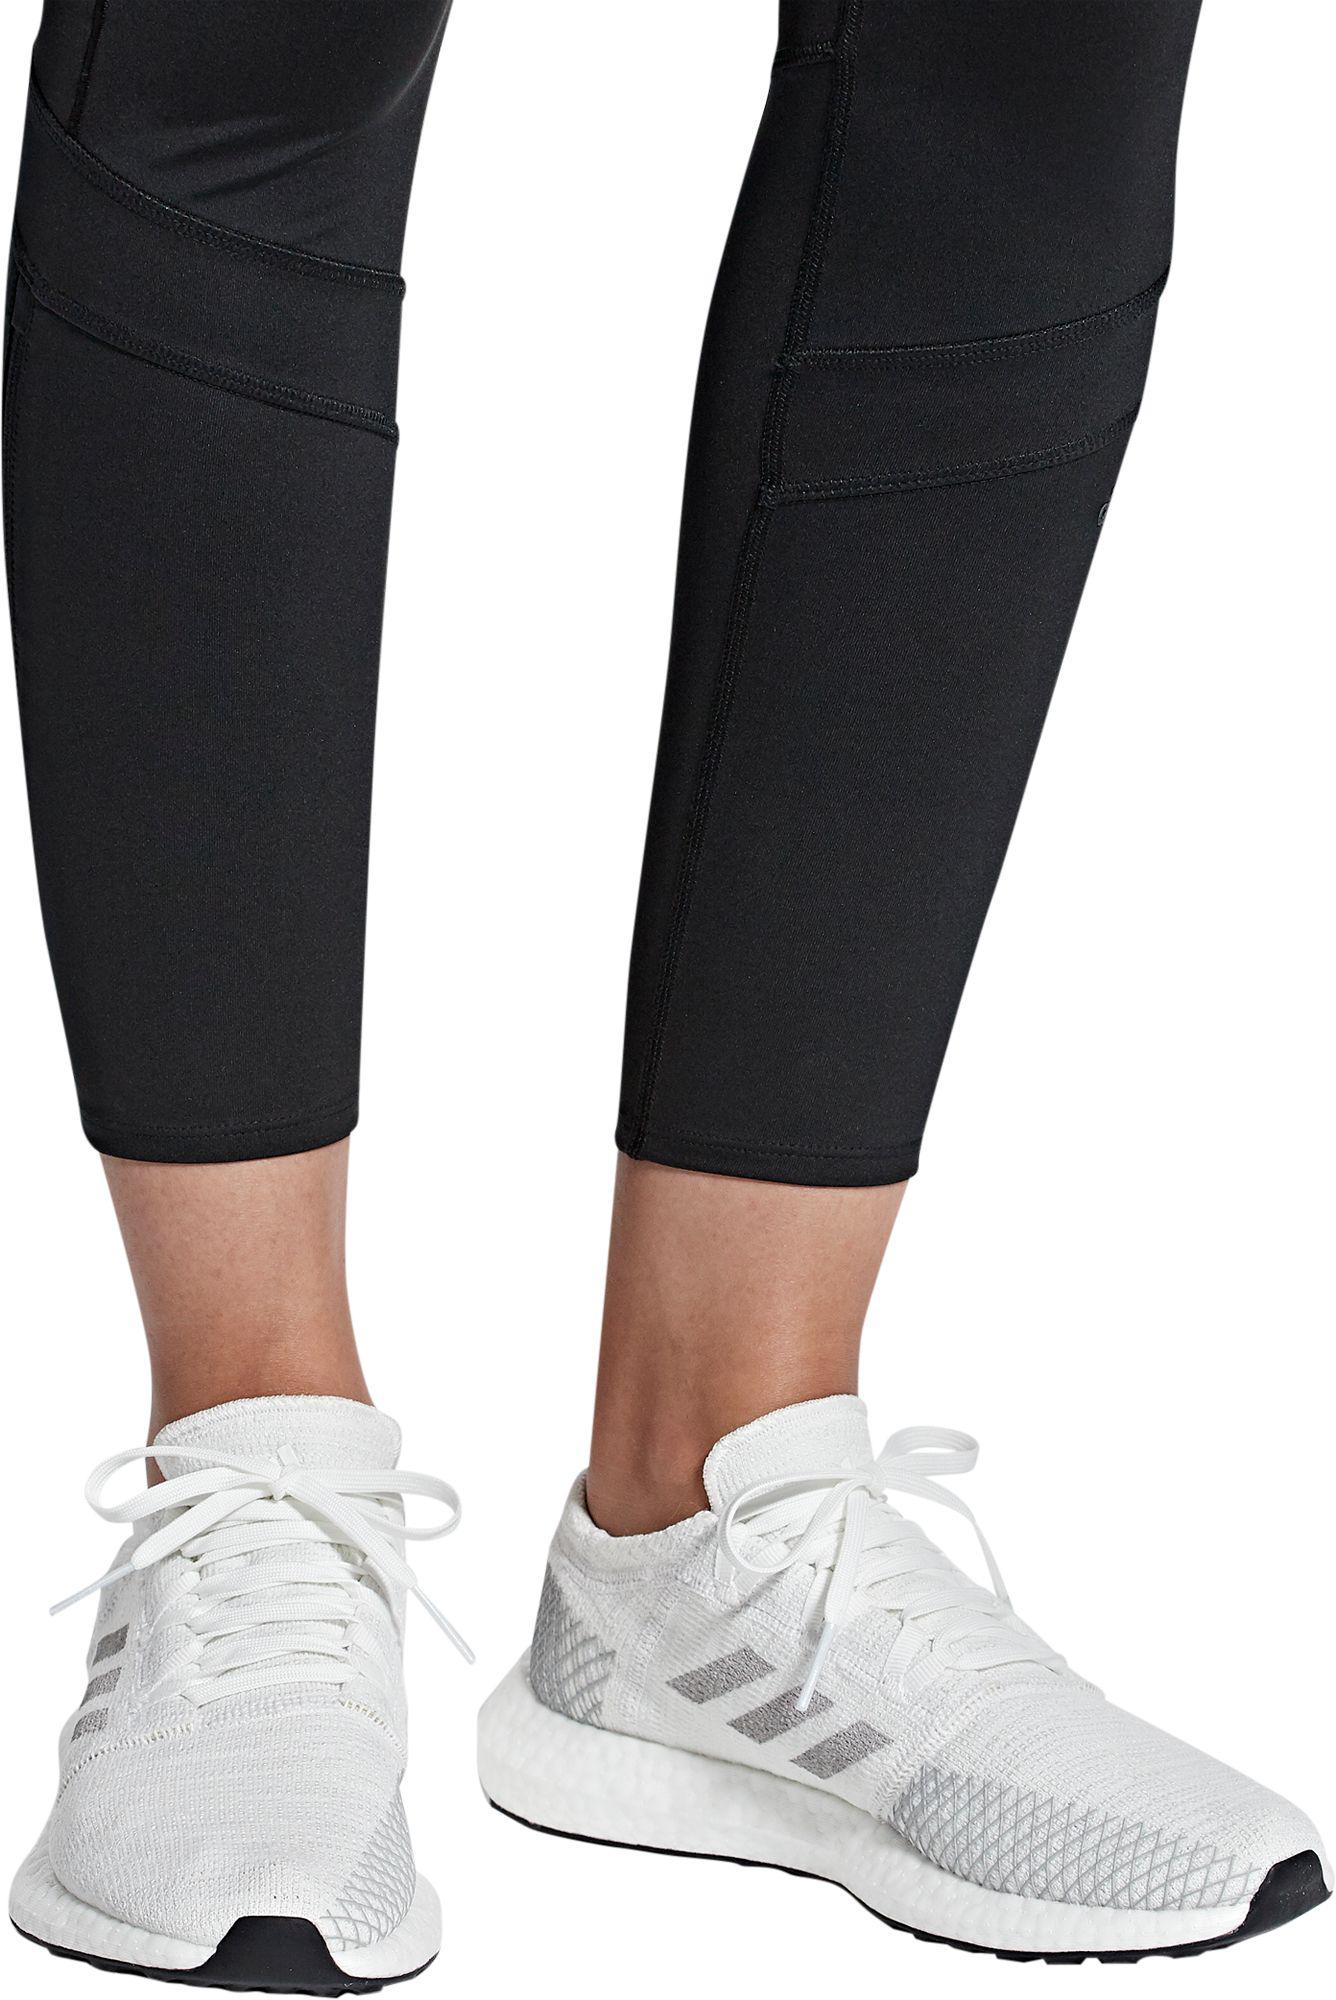 adidas women's pureboost go running shoes